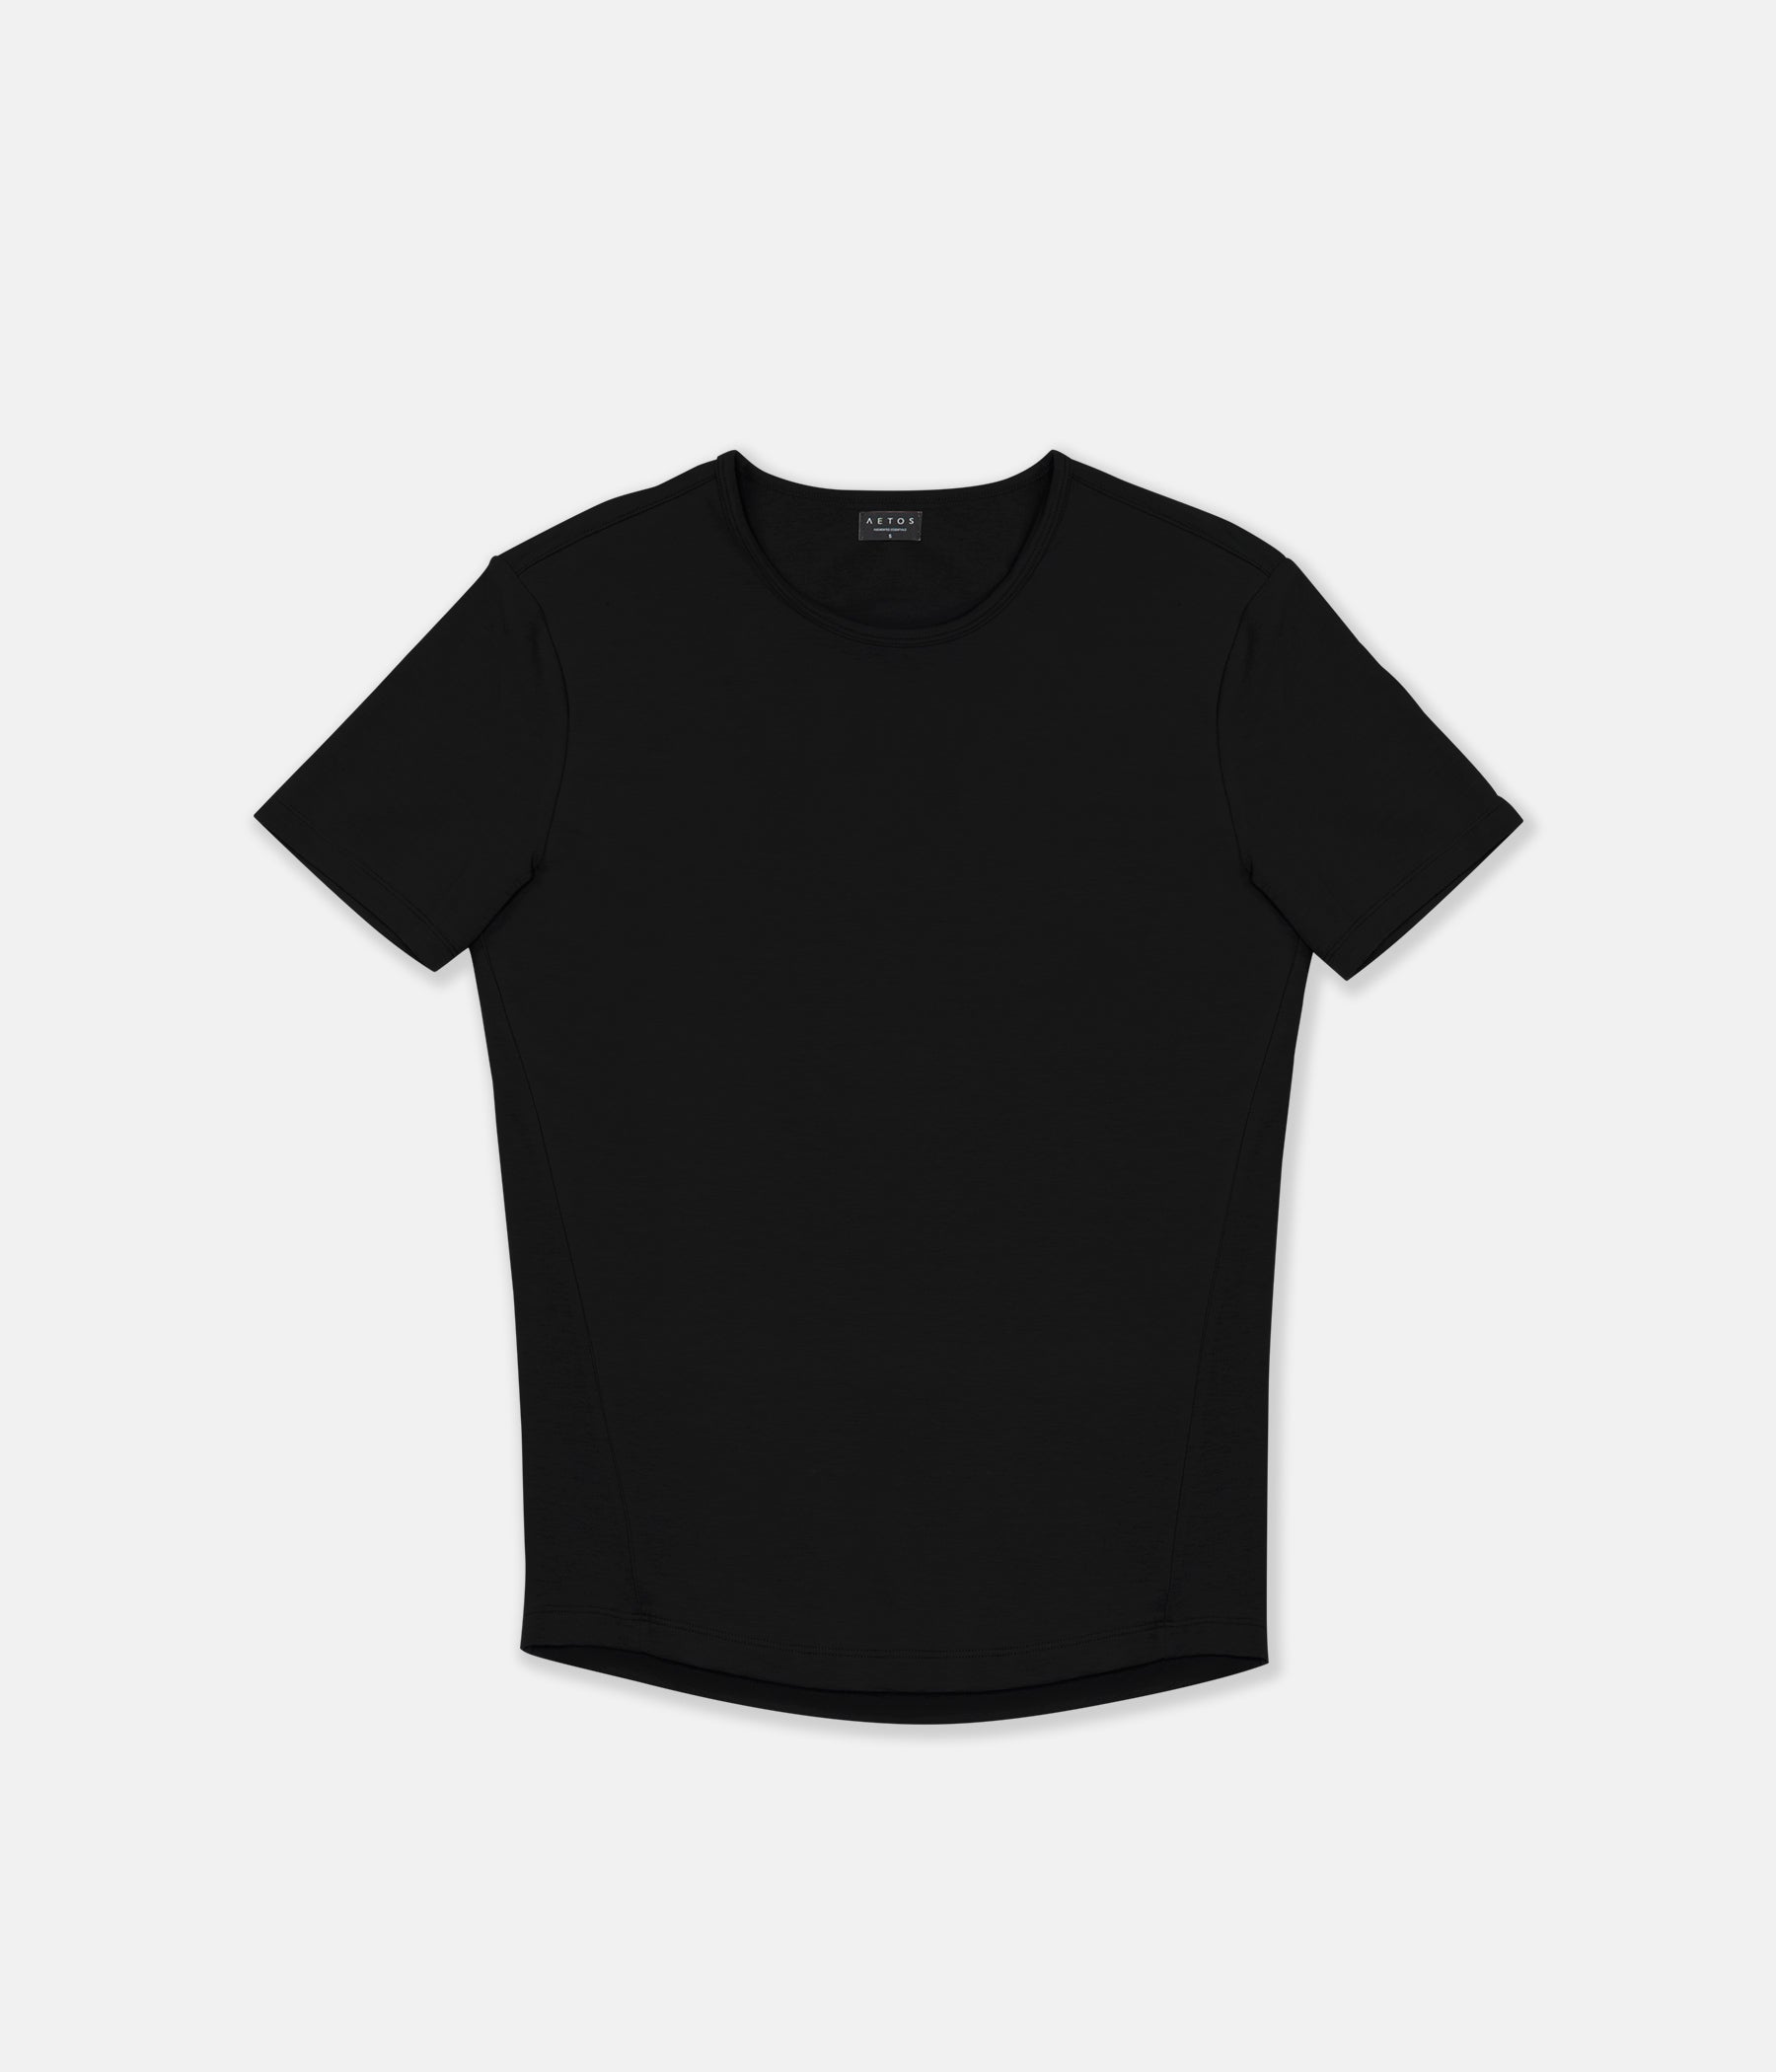 Men's Raglan T-shirt Retro Short Sleeve Round Neck Letter Printing Tops 